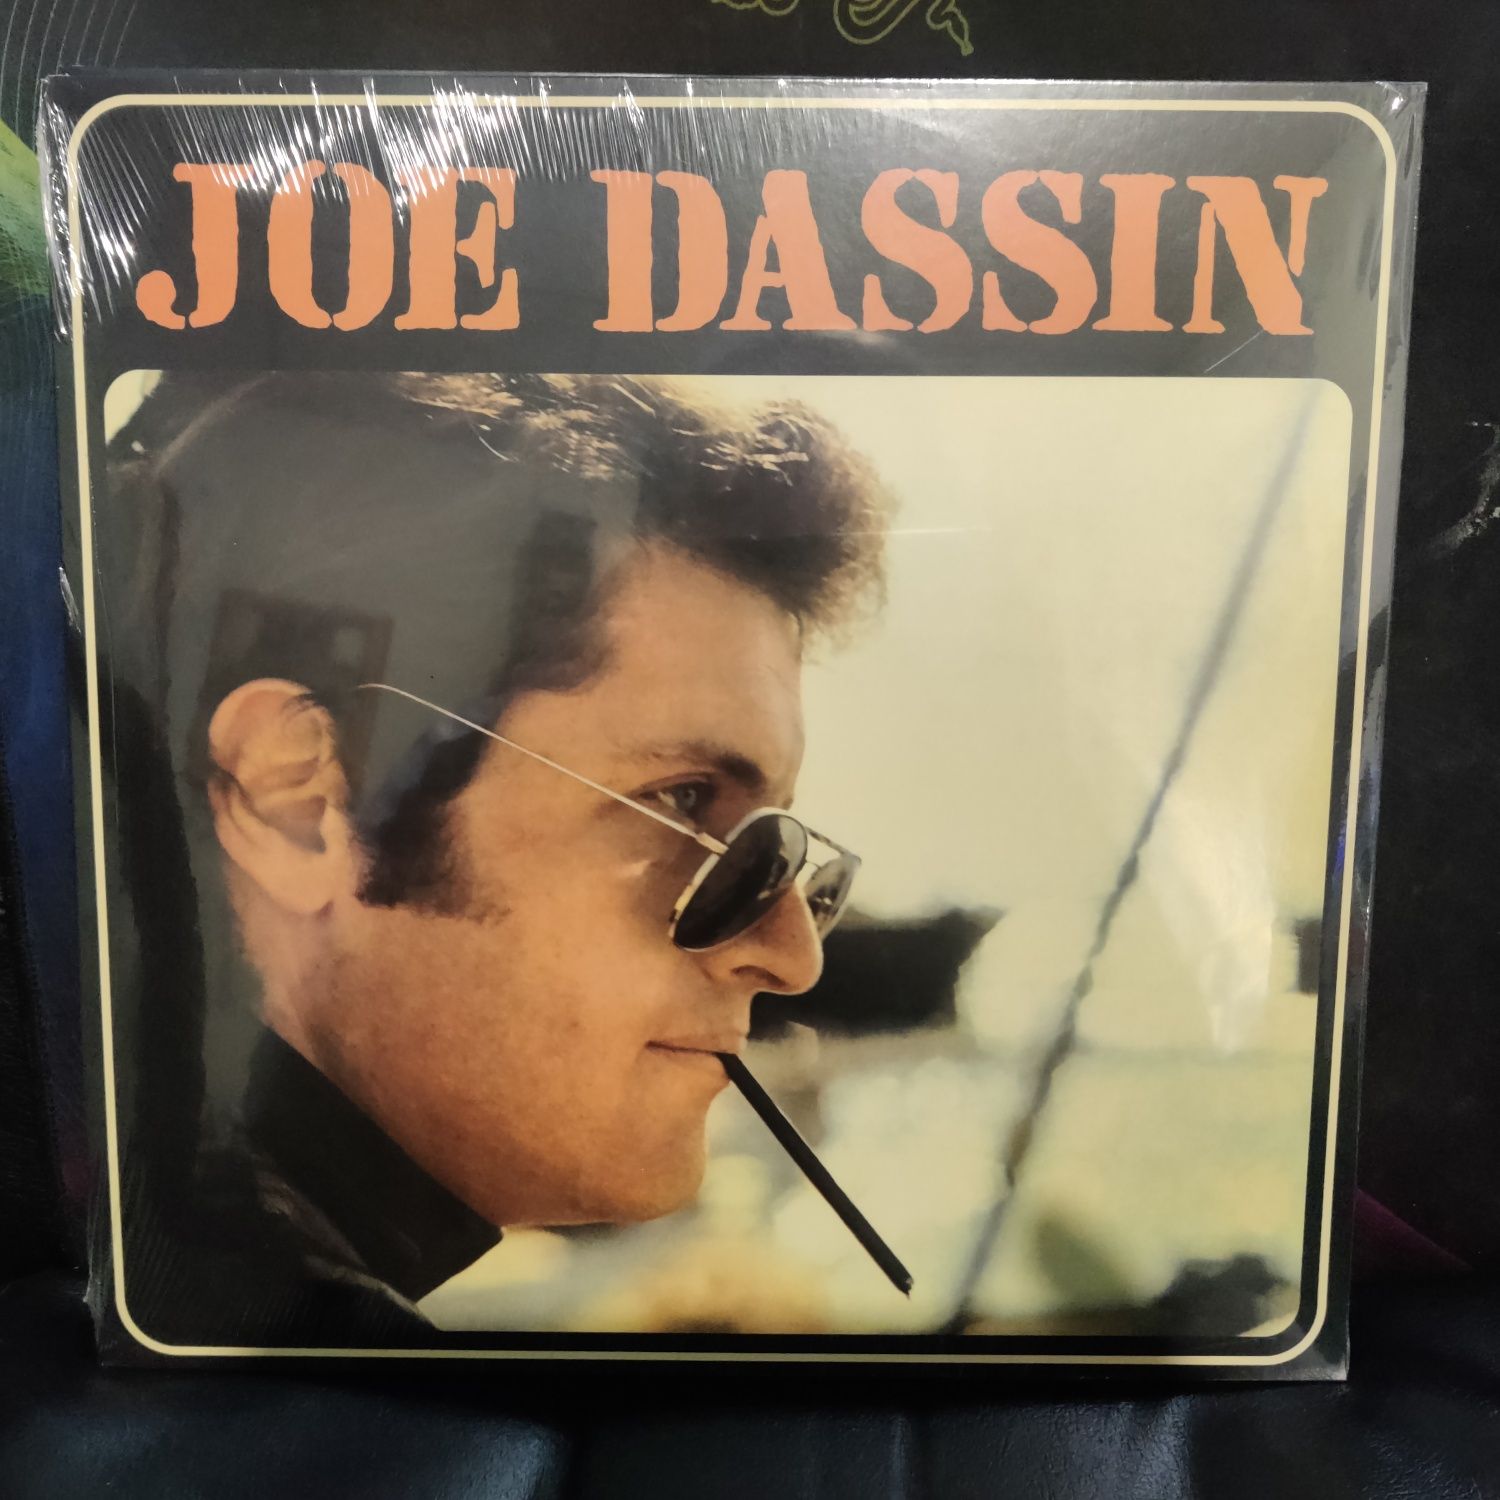 Joe Dassin, Les Champs-Elysees, Vinyl LP, Sony Music, EU